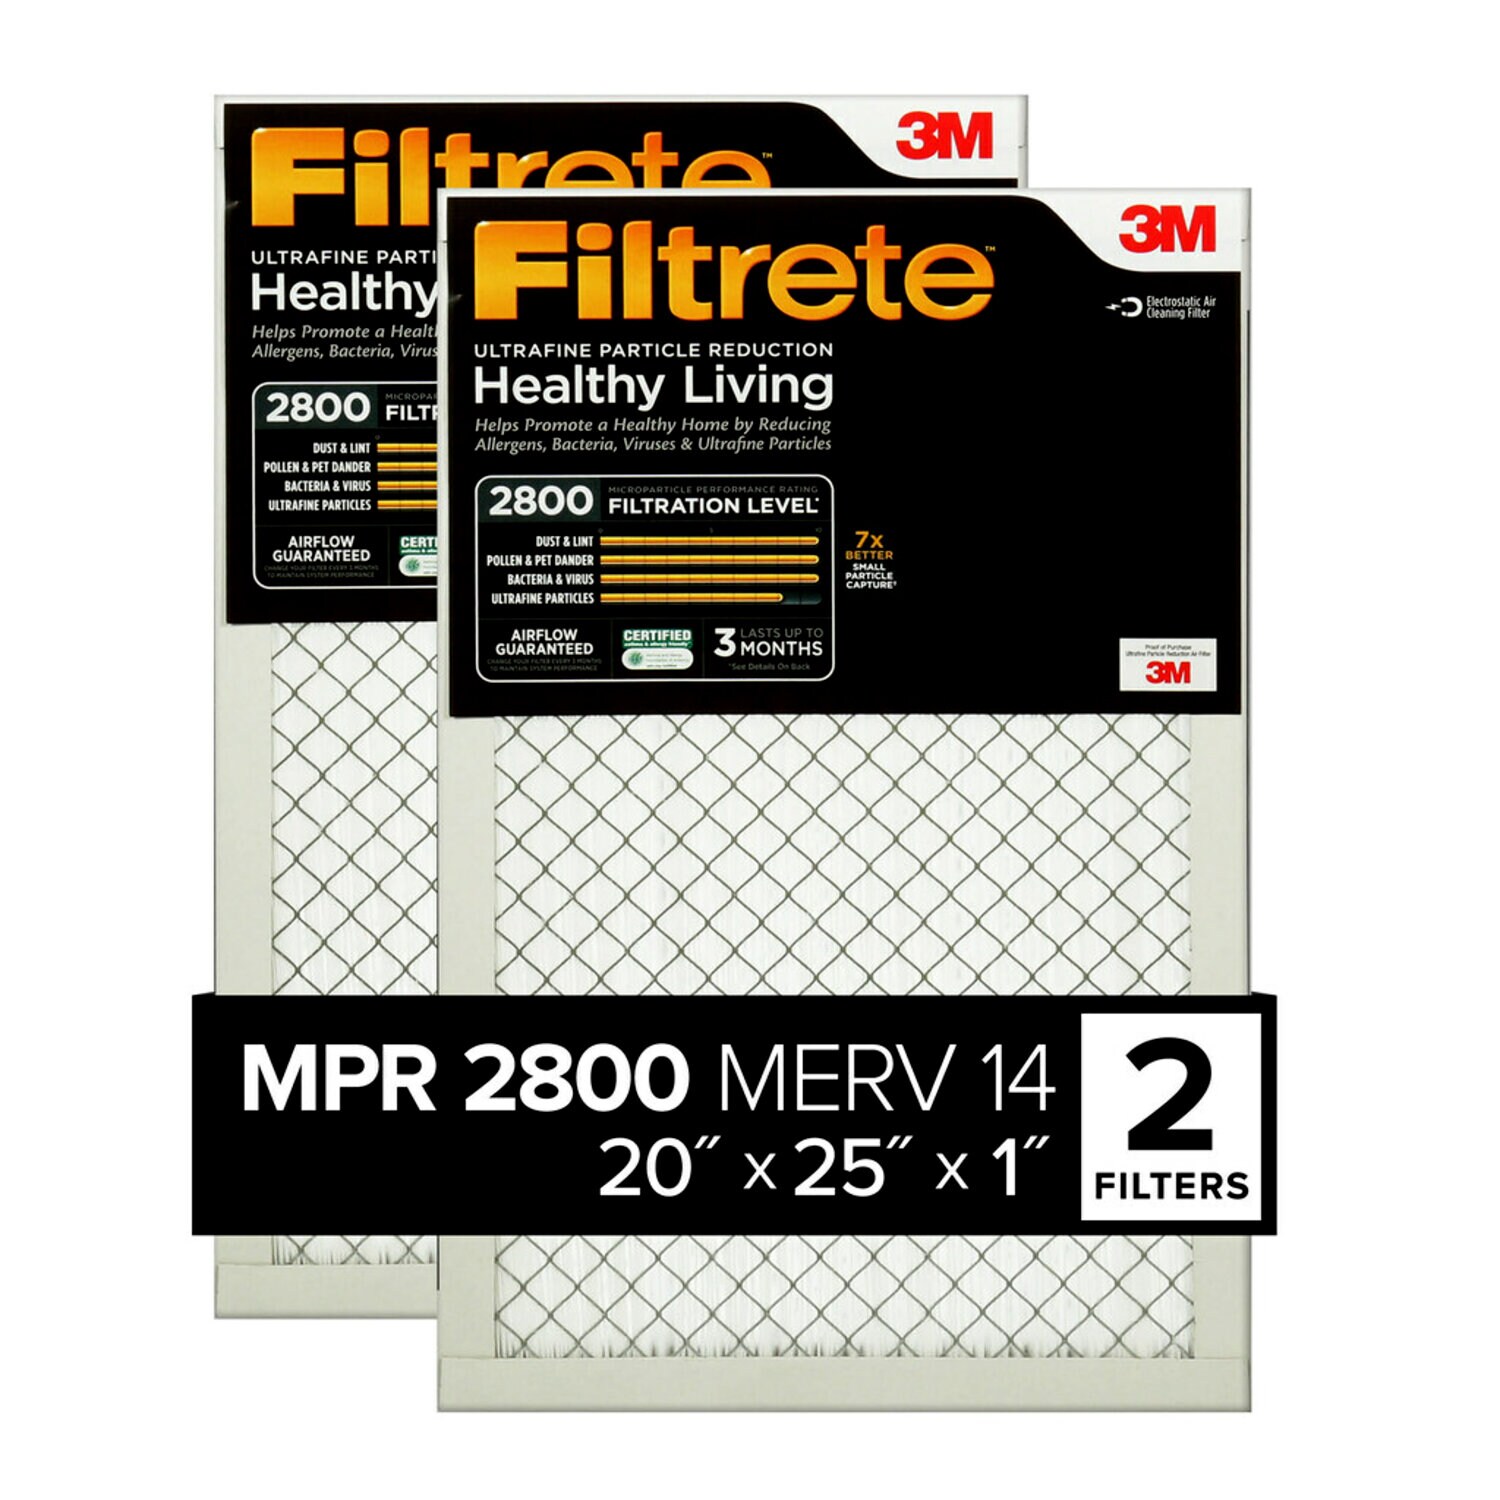 7100212137 - Filtrete Ultrafine Particle Reduction Filter UF03-2PK-1E, 20 in x 25 in x 1 in(50.8 cm x 63.5 cm x 2.5 cm)